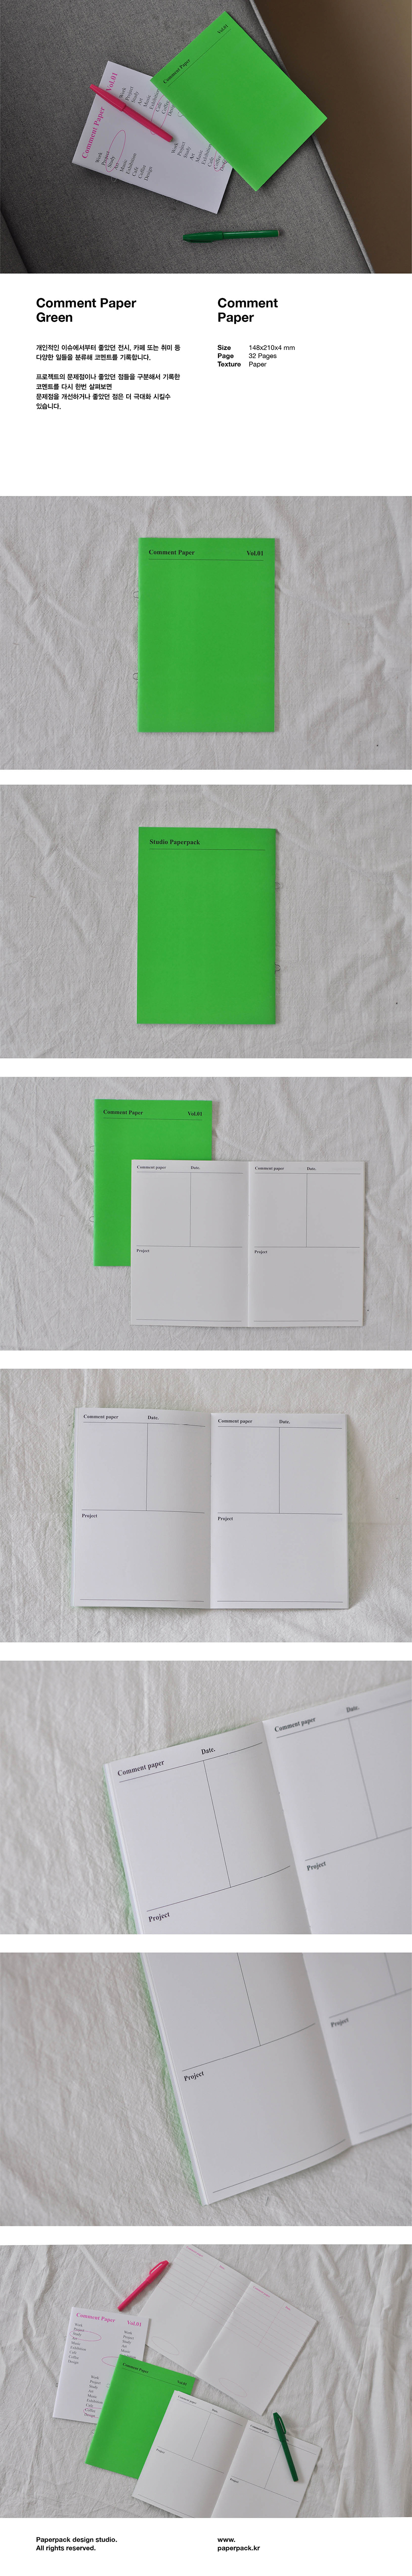 Comment Paper-Green 6,000원 - 페이퍼팩 디자인문구, 플래너/스케줄러, 플래너, 테마플래너 바보사랑 Comment Paper-Green 6,000원 - 페이퍼팩 디자인문구, 플래너/스케줄러, 플래너, 테마플래너 바보사랑